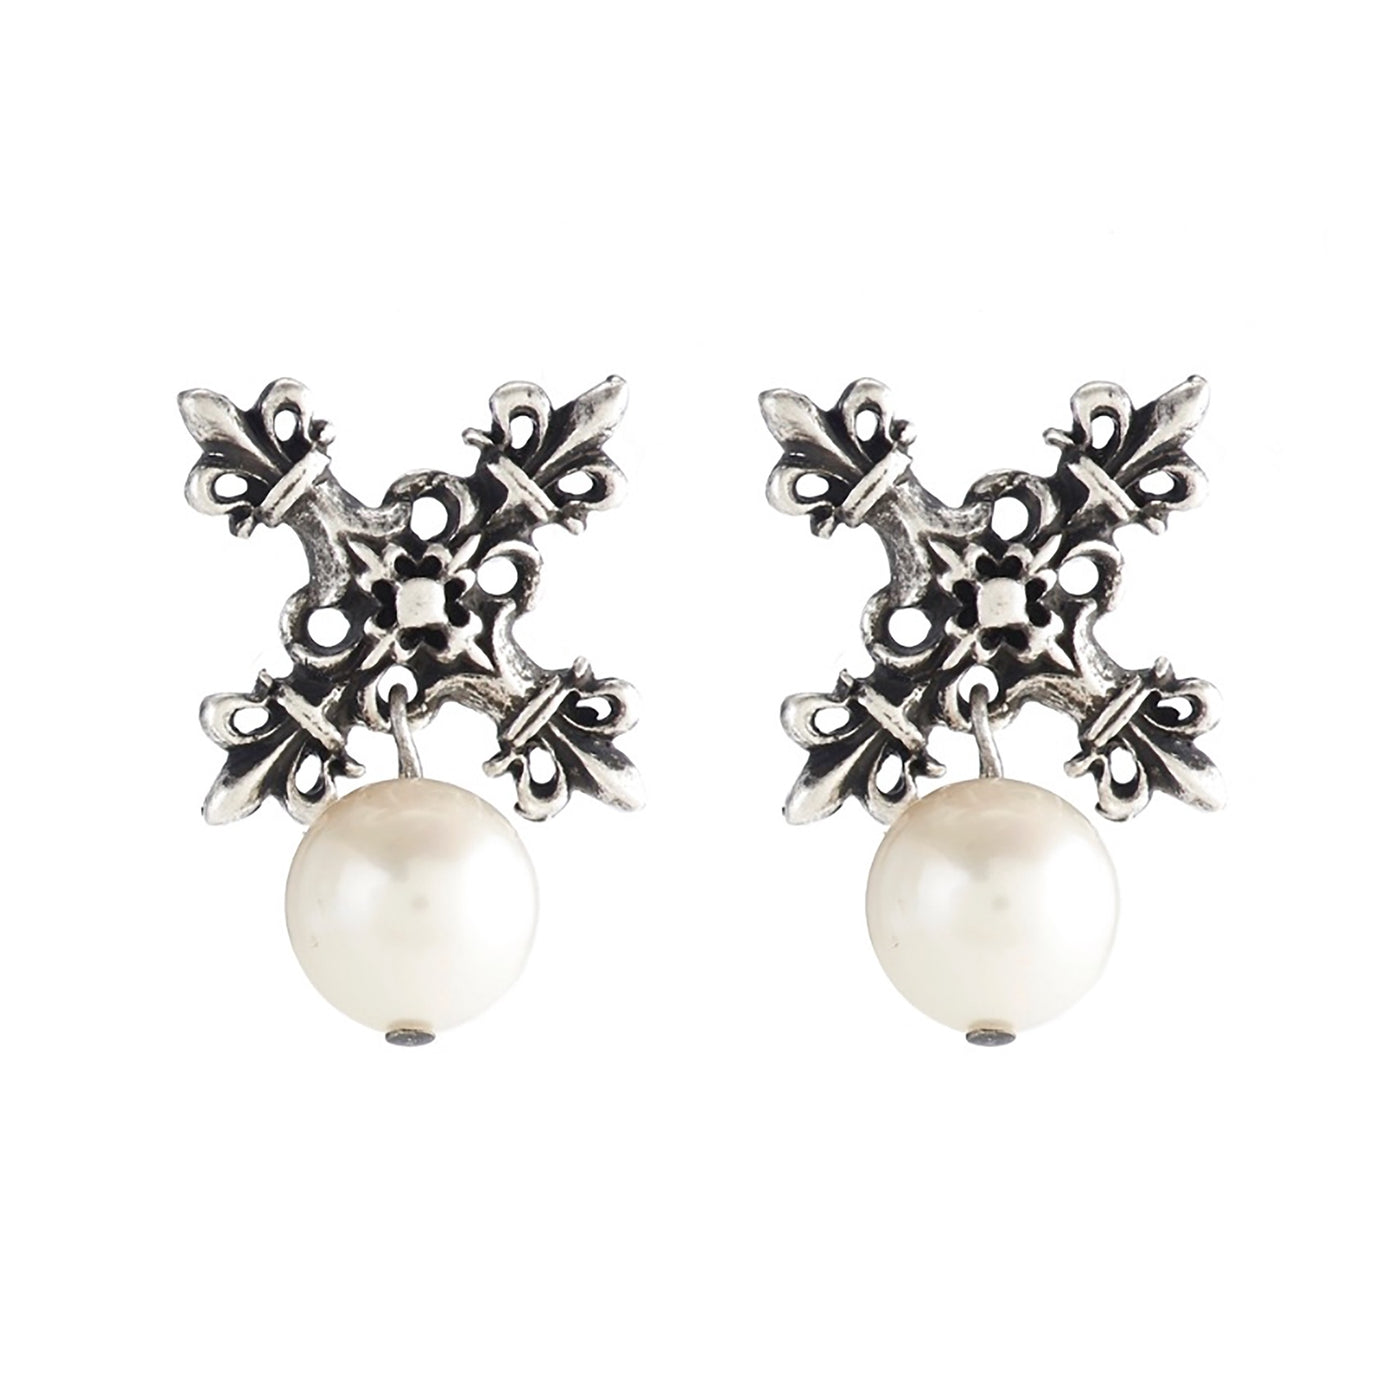 Silver "X" Earrings with Pearl Dangle